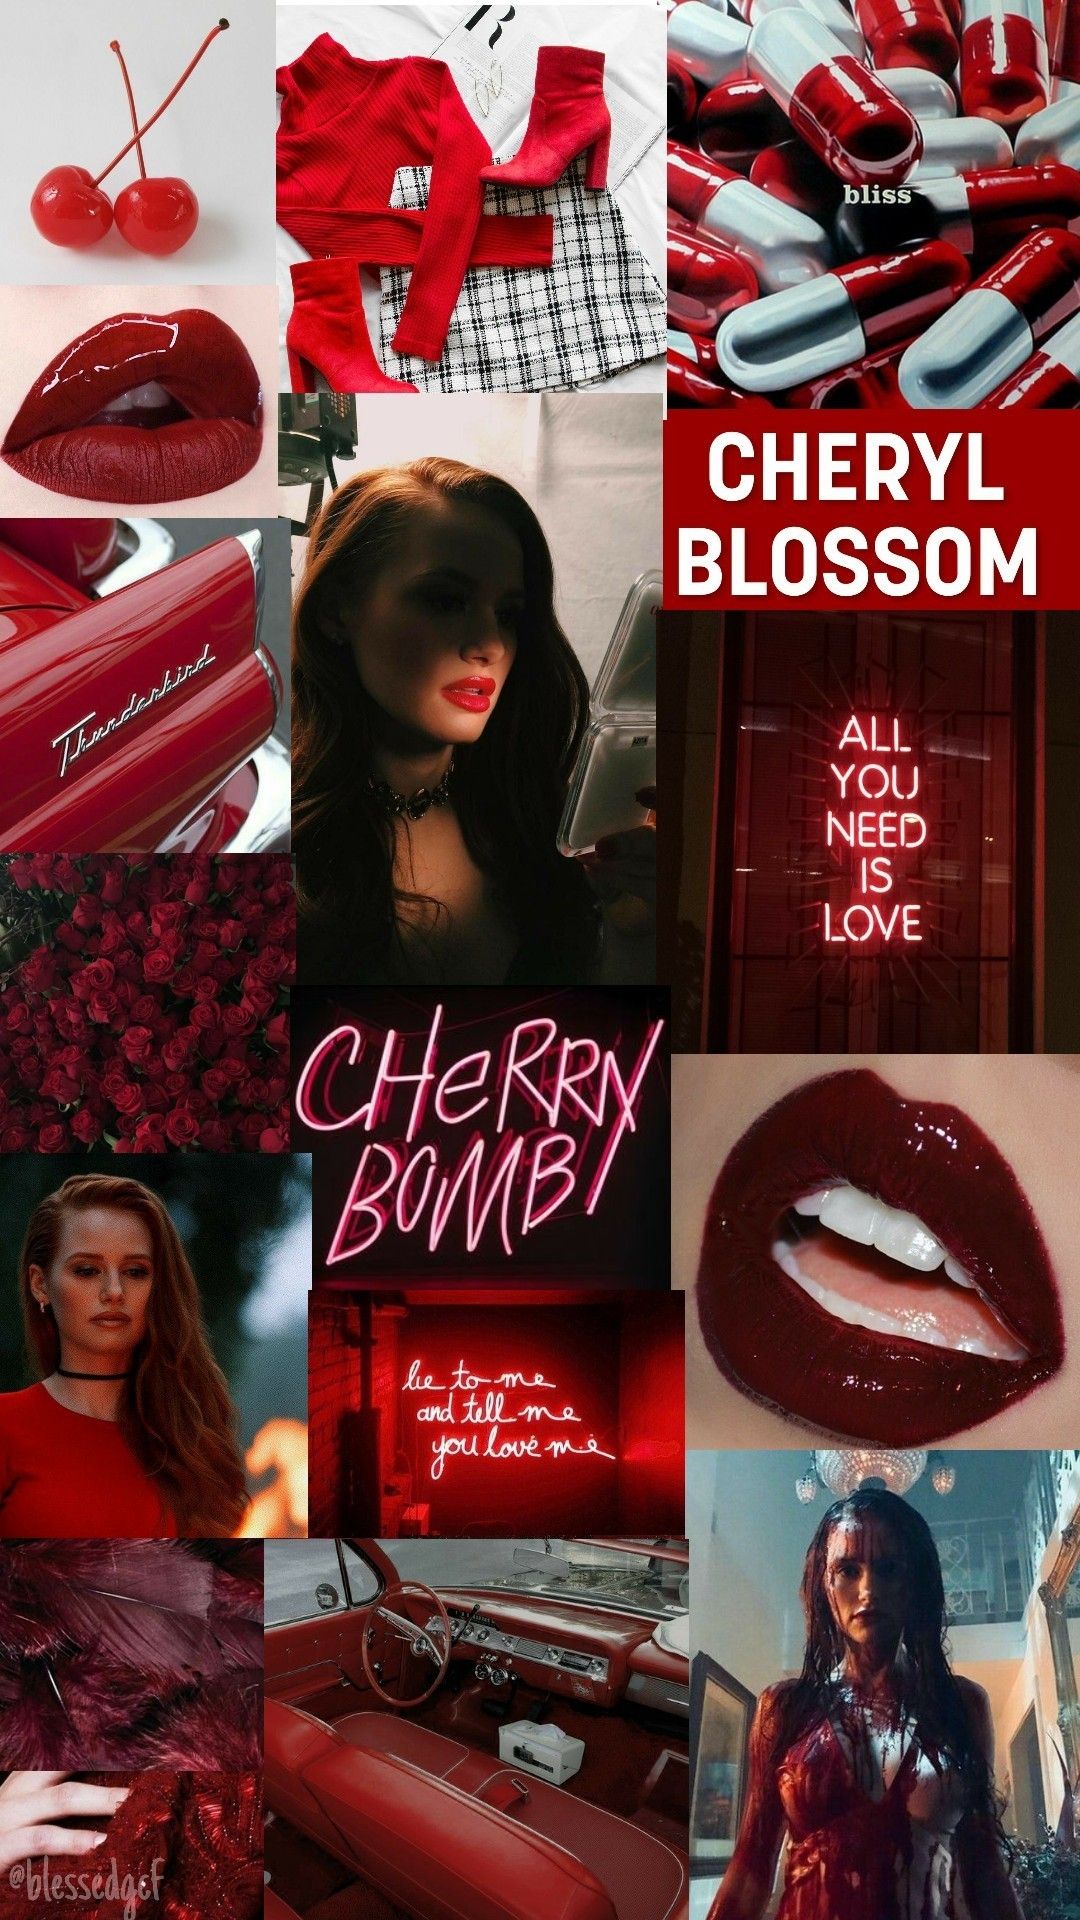 Cheryl Blossom Wallpapers